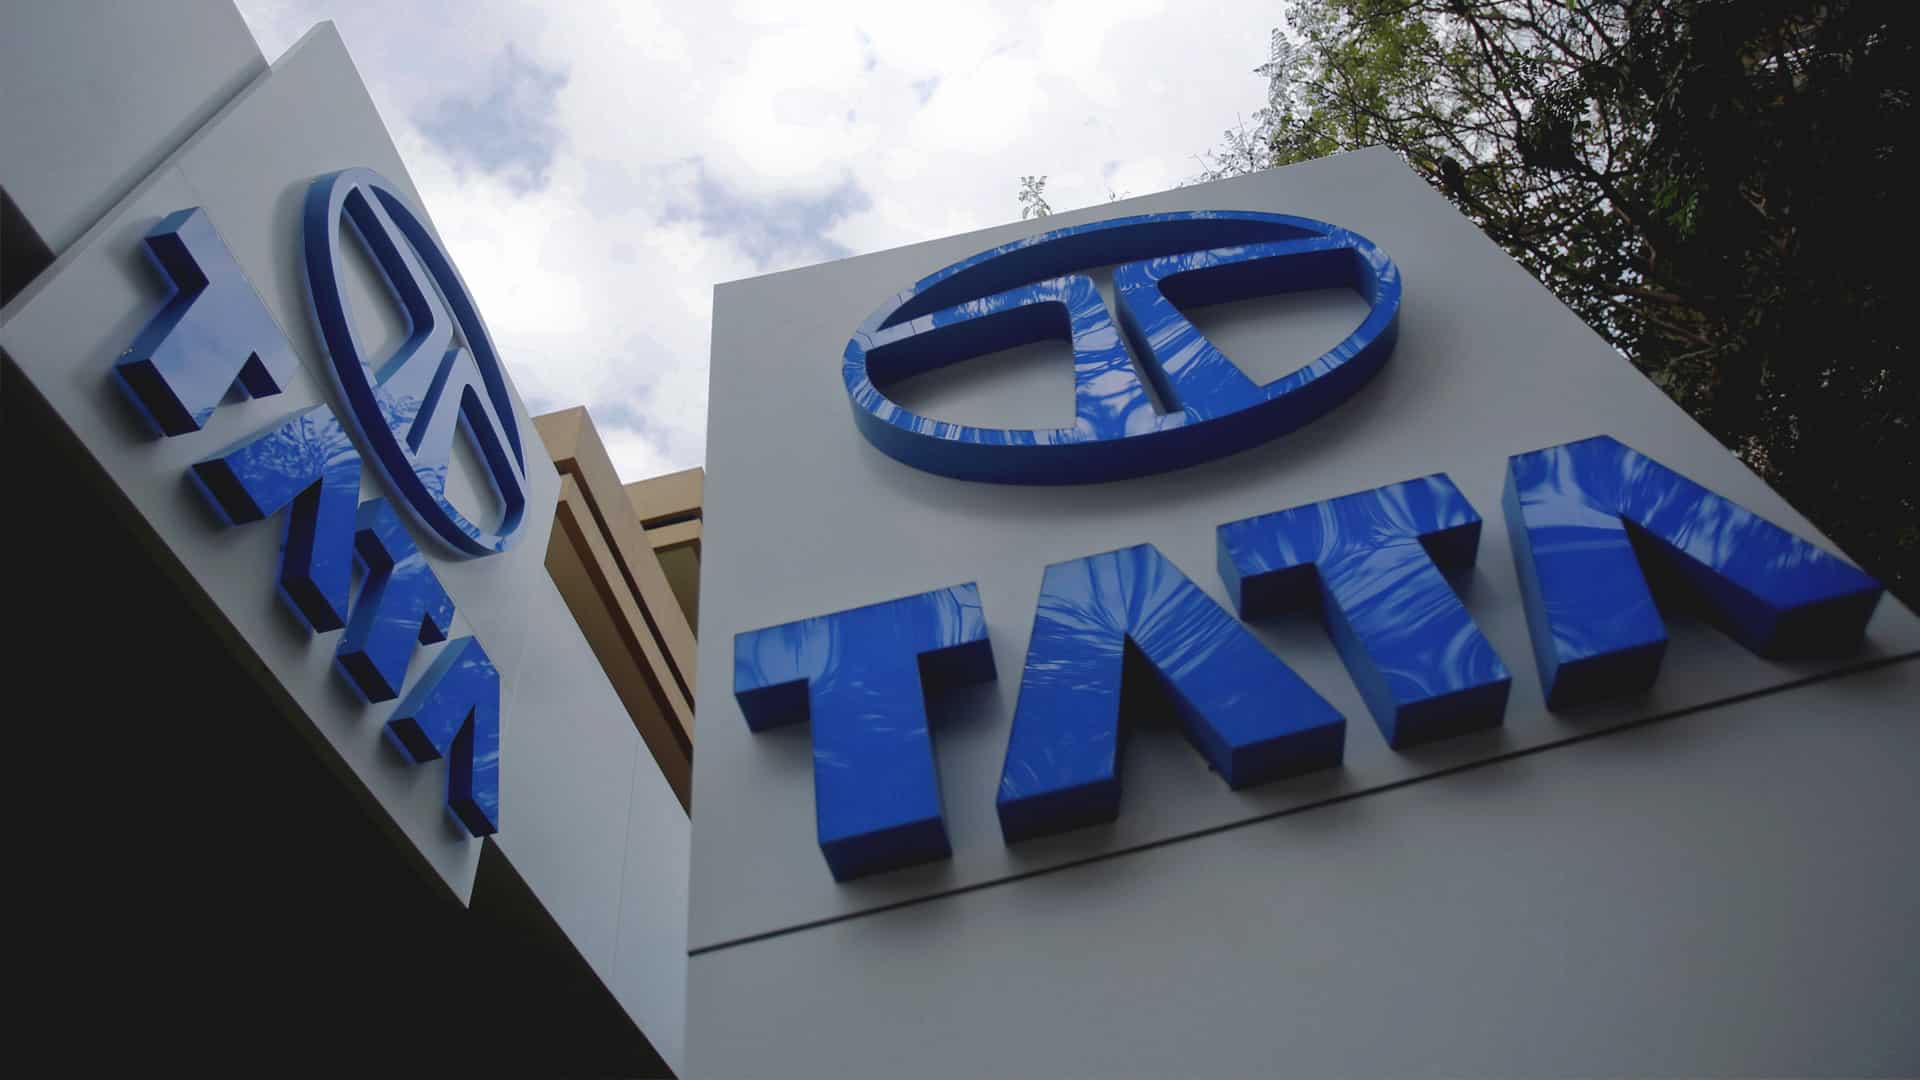 Tata Motors total global sales fell marginally to 78,010 units in August